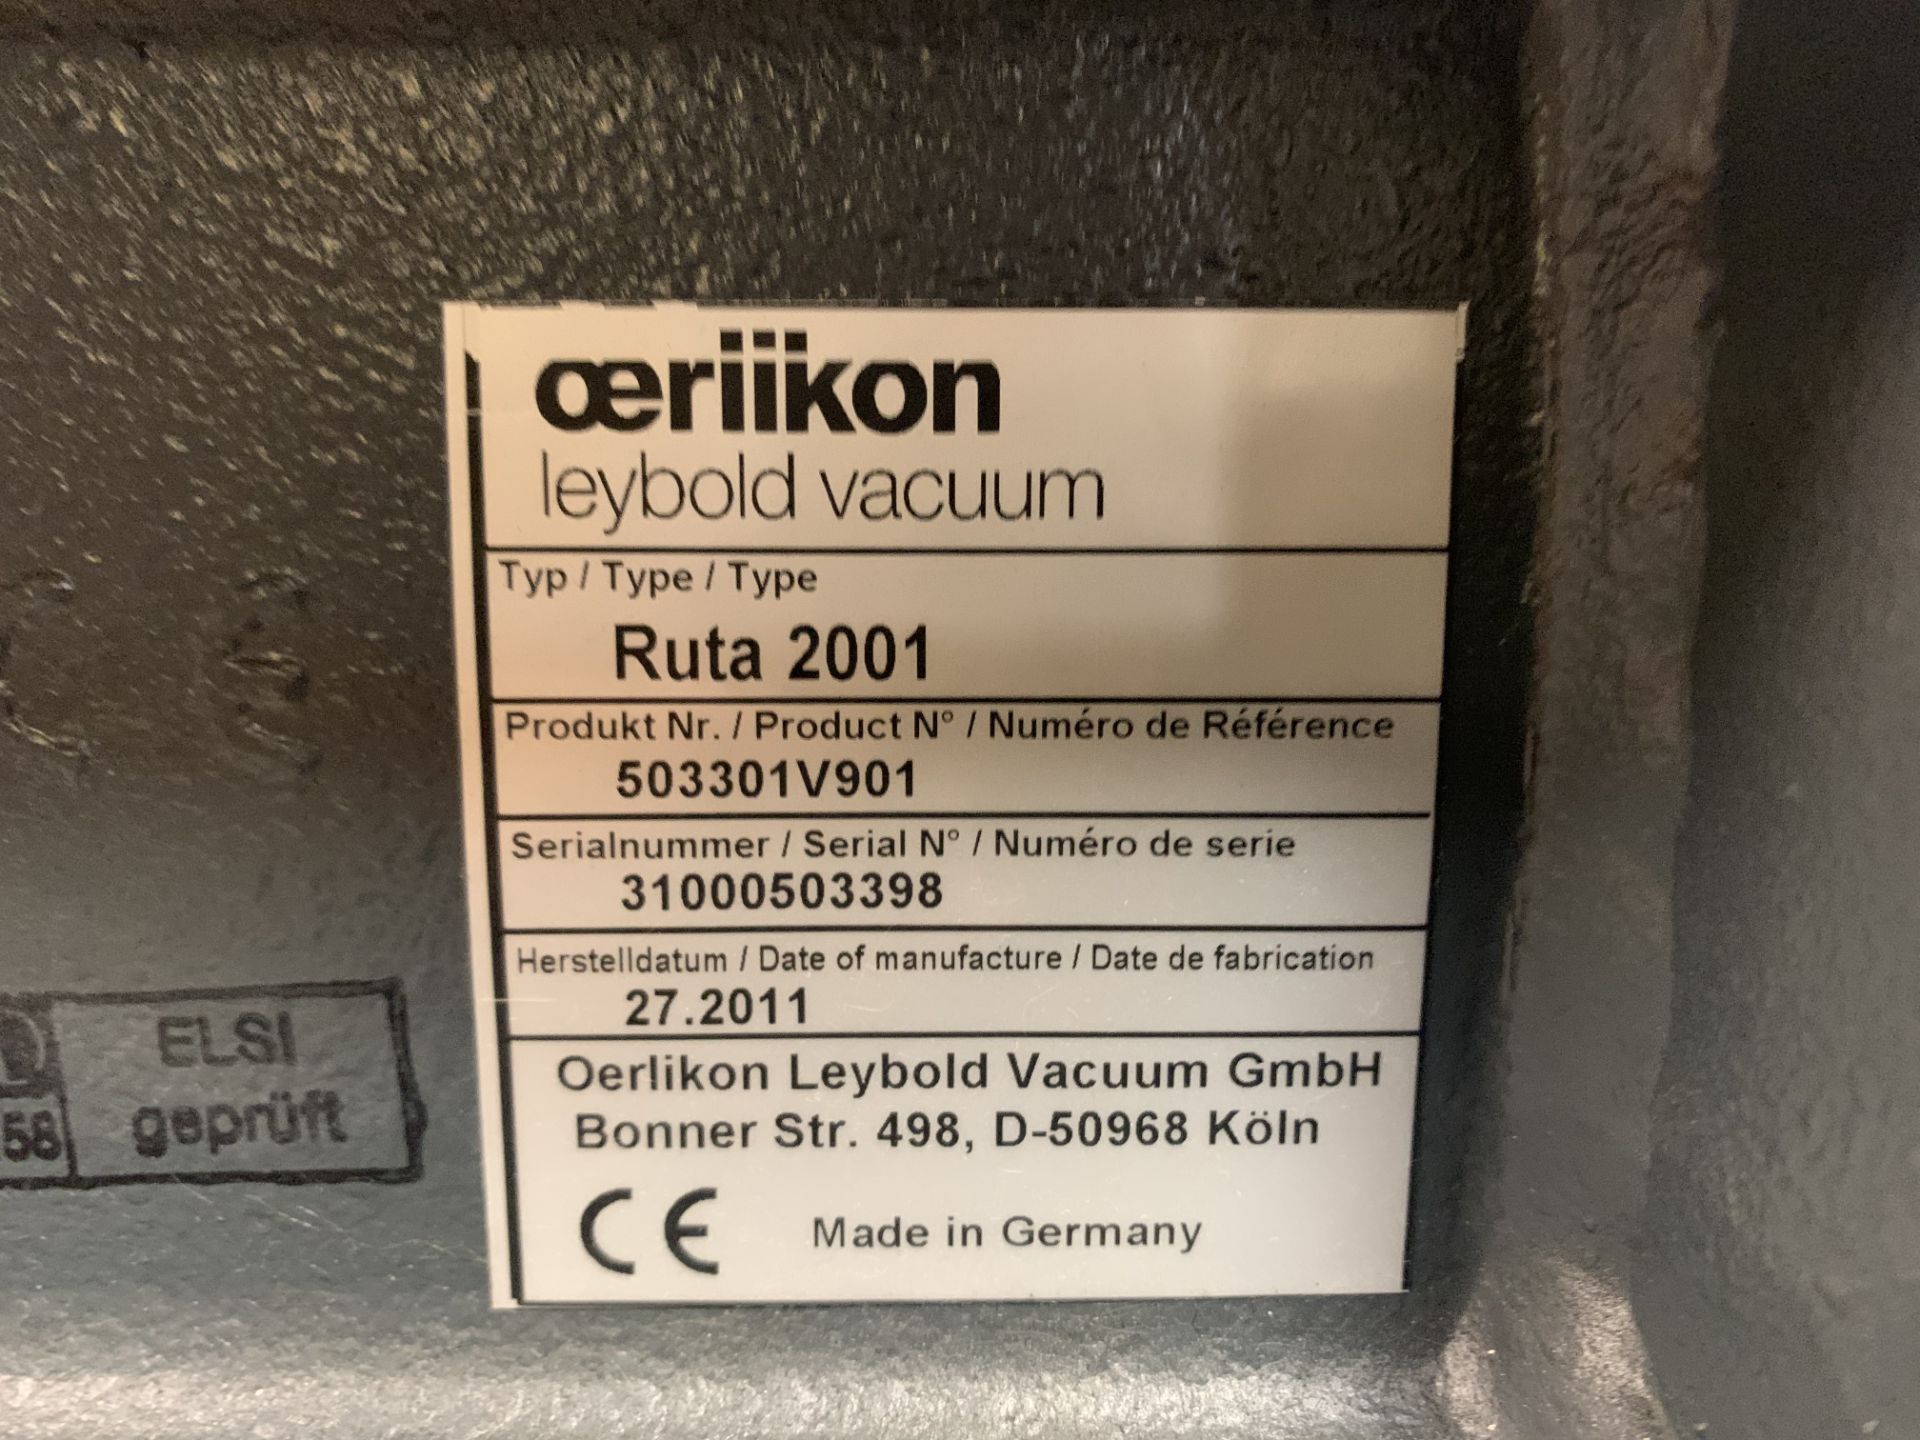 OERLIKON-LEYBOLD SP630 VACUUM PUMP 117008, 630M³/H 15KW 460V 52A, W/RUVAC ROUGHING PUMPS 167403, 167 - Image 12 of 15